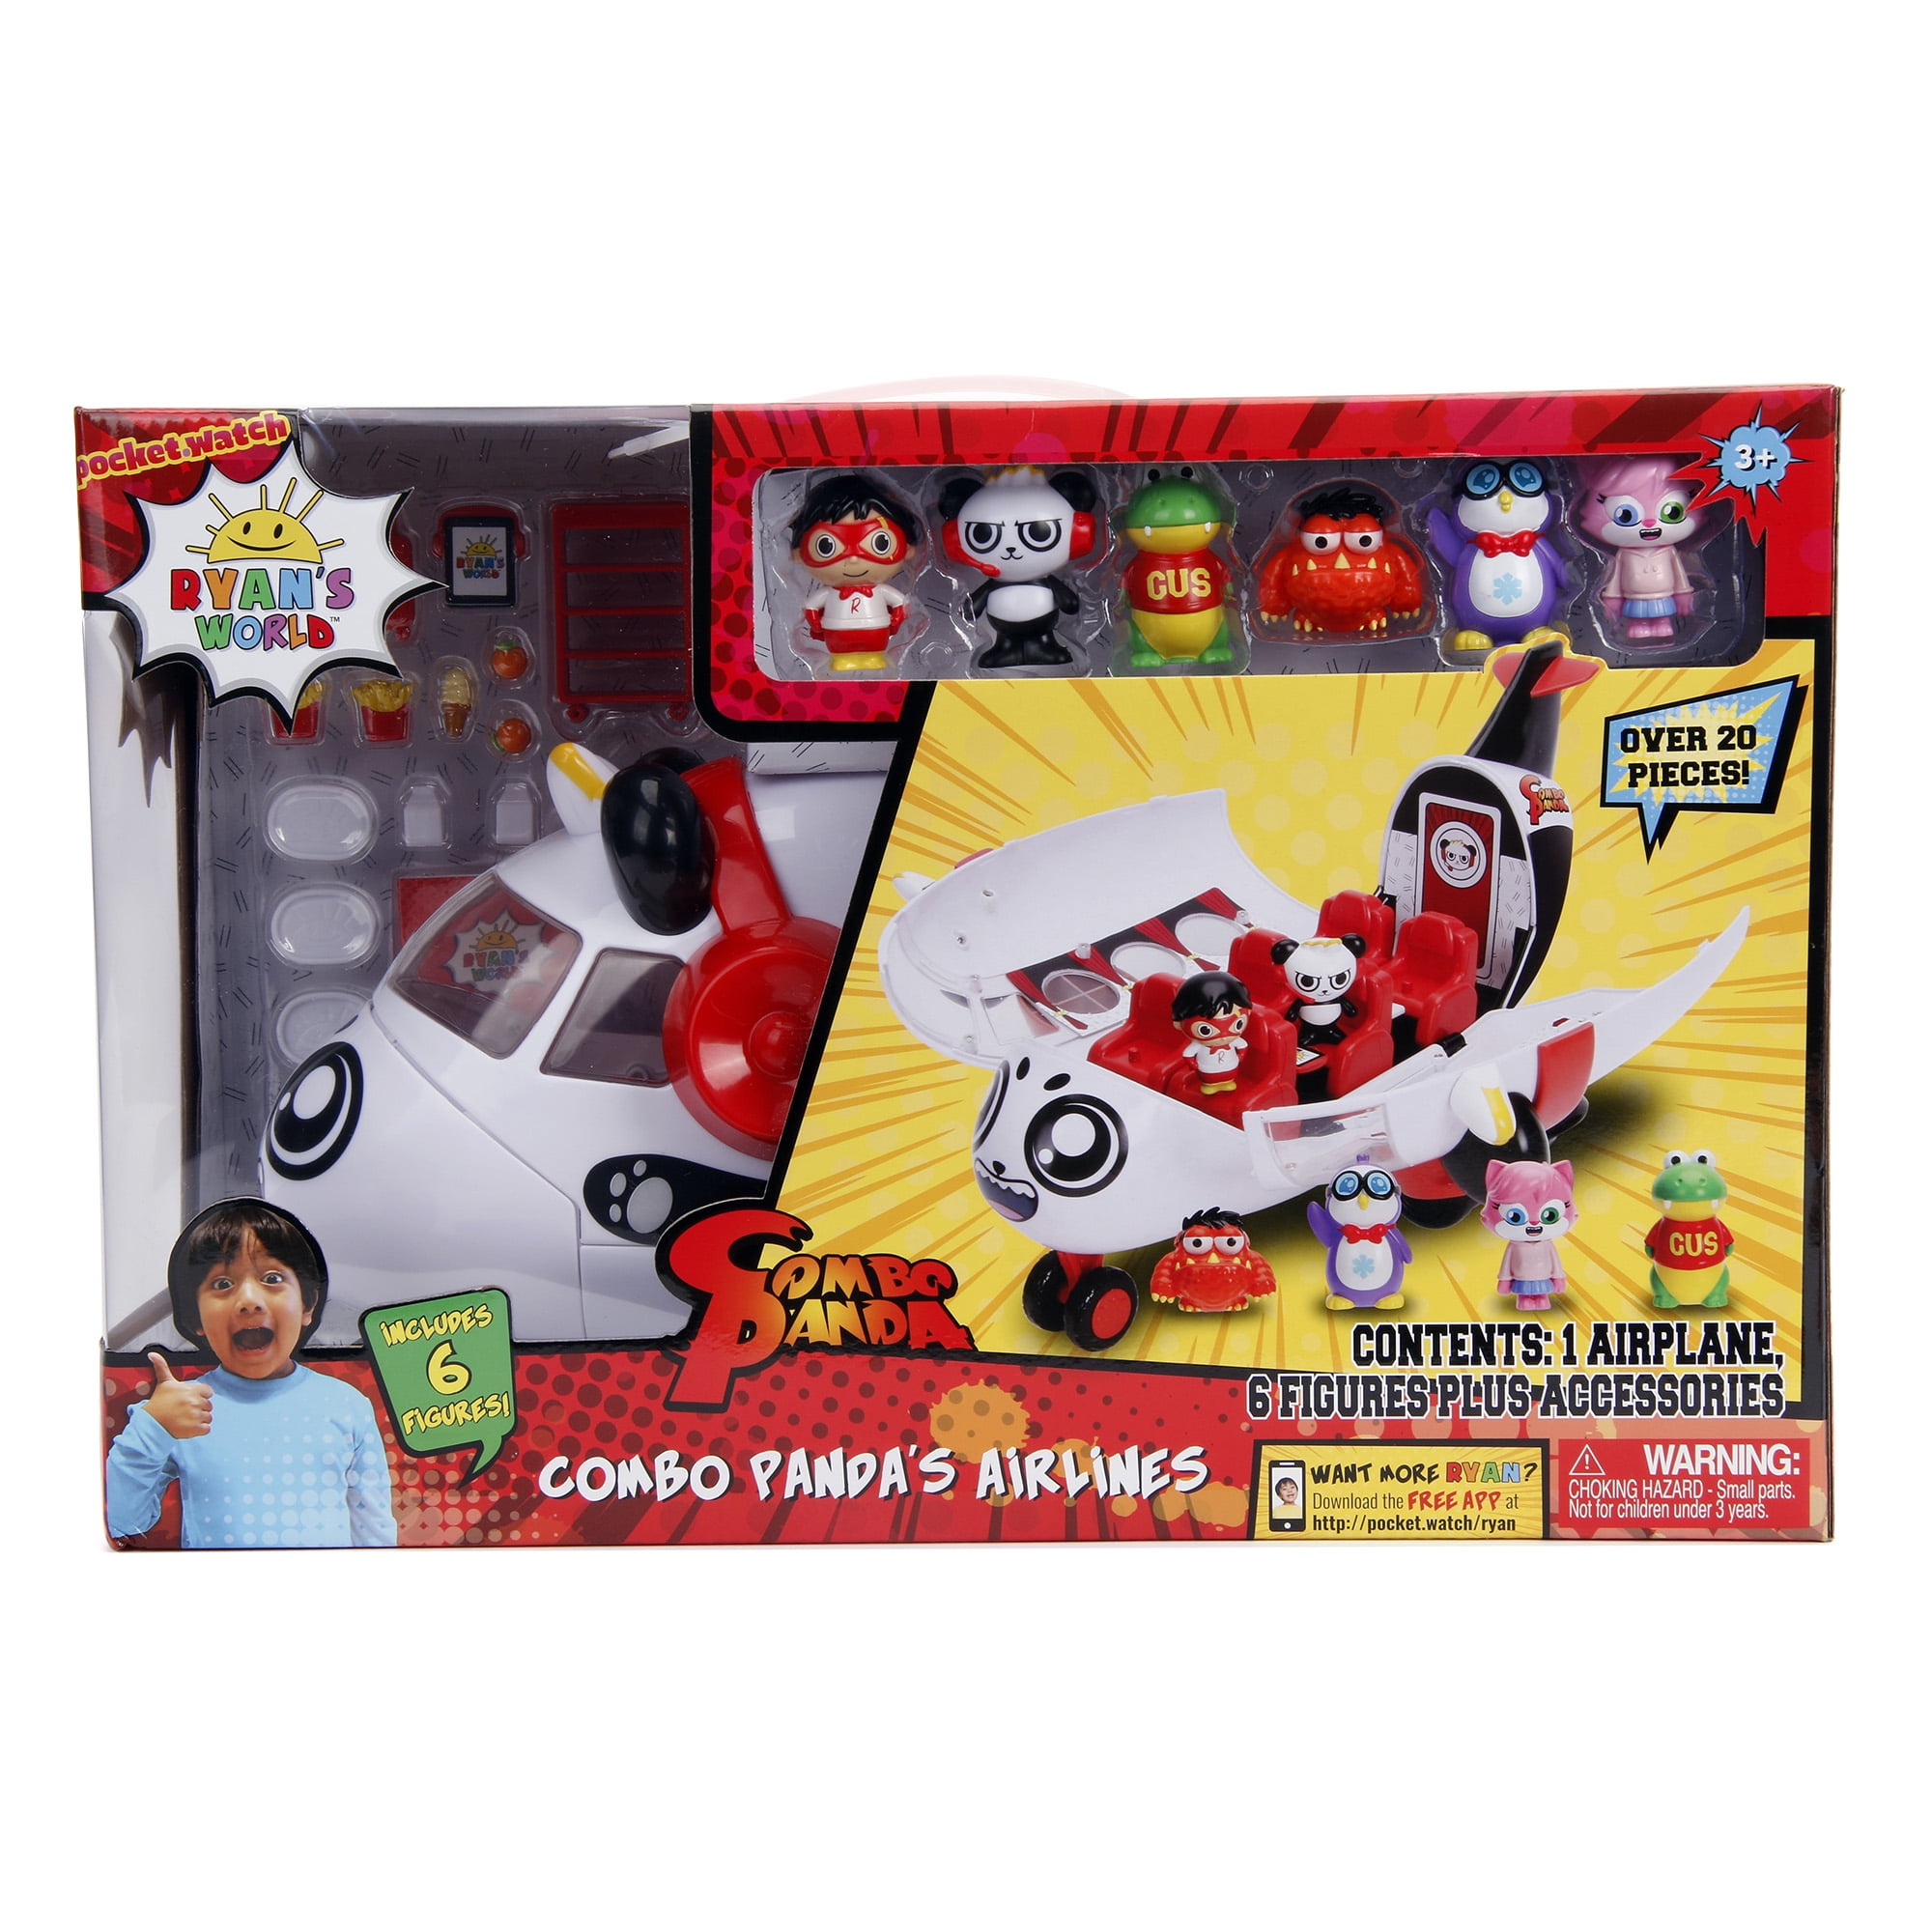 Ryan's World Combo Panda Airplane Case 6 Figures Play Set Children Toy Gift 